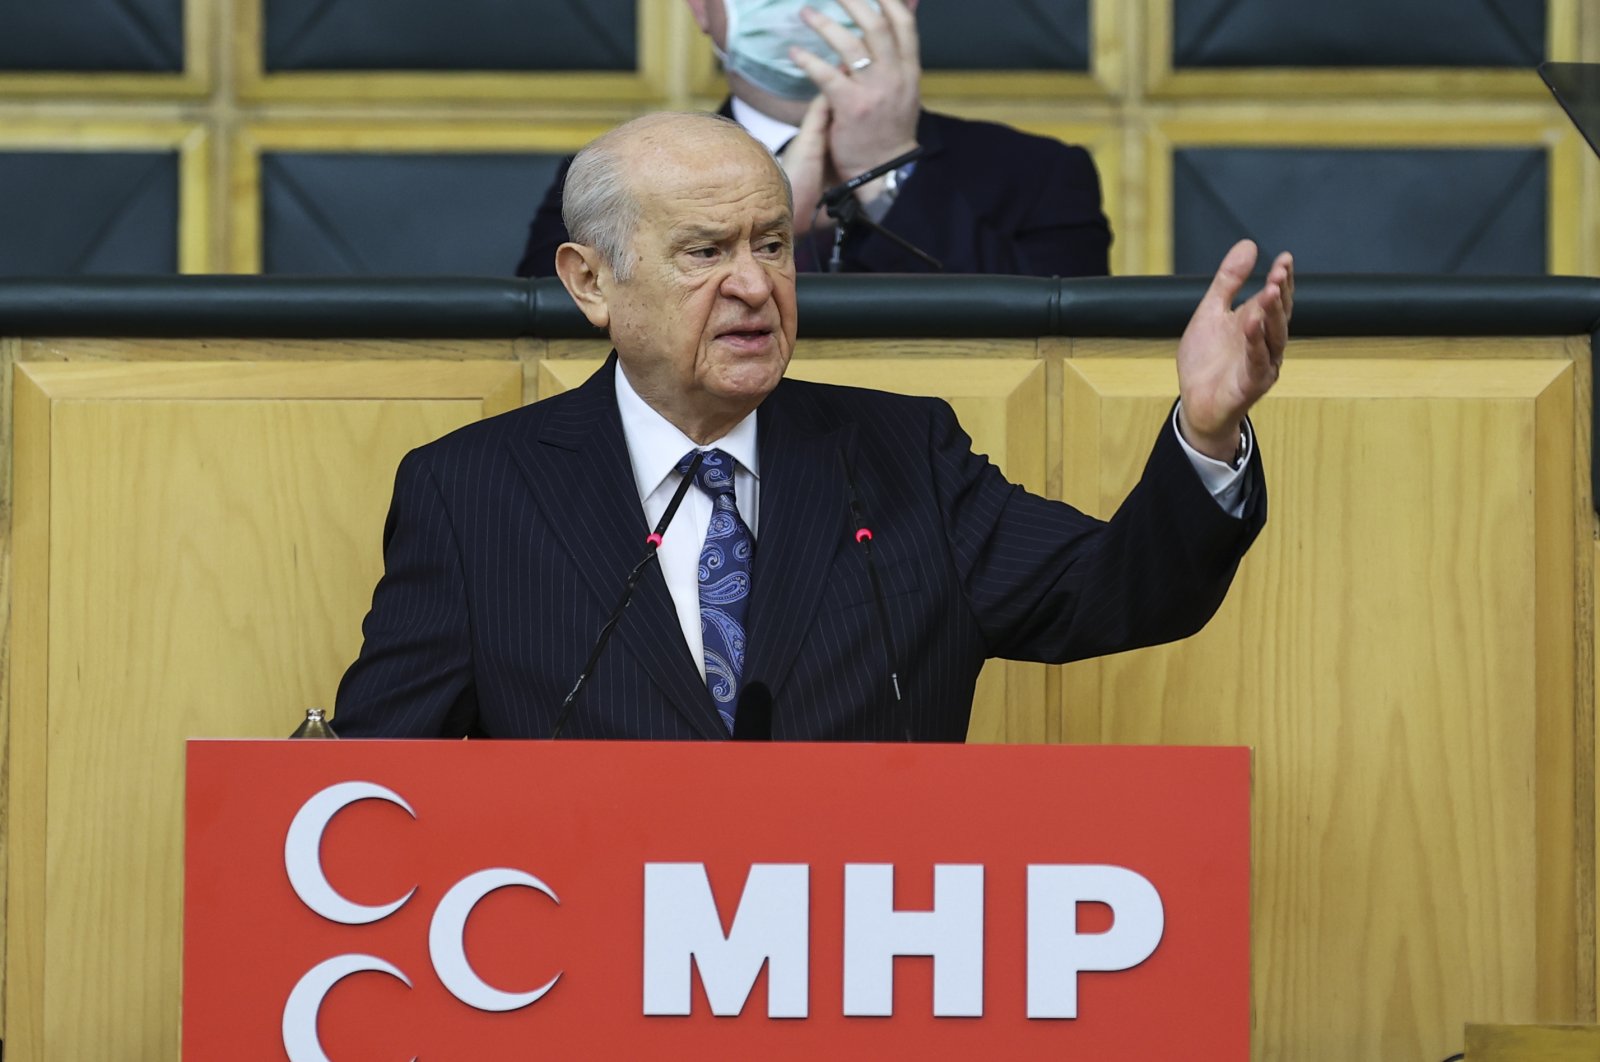 MHP leader Devlet Bahçeli speaks at his party's parliamentary group meeting in Ankara, Turkey, March 2, 2021. (AA)